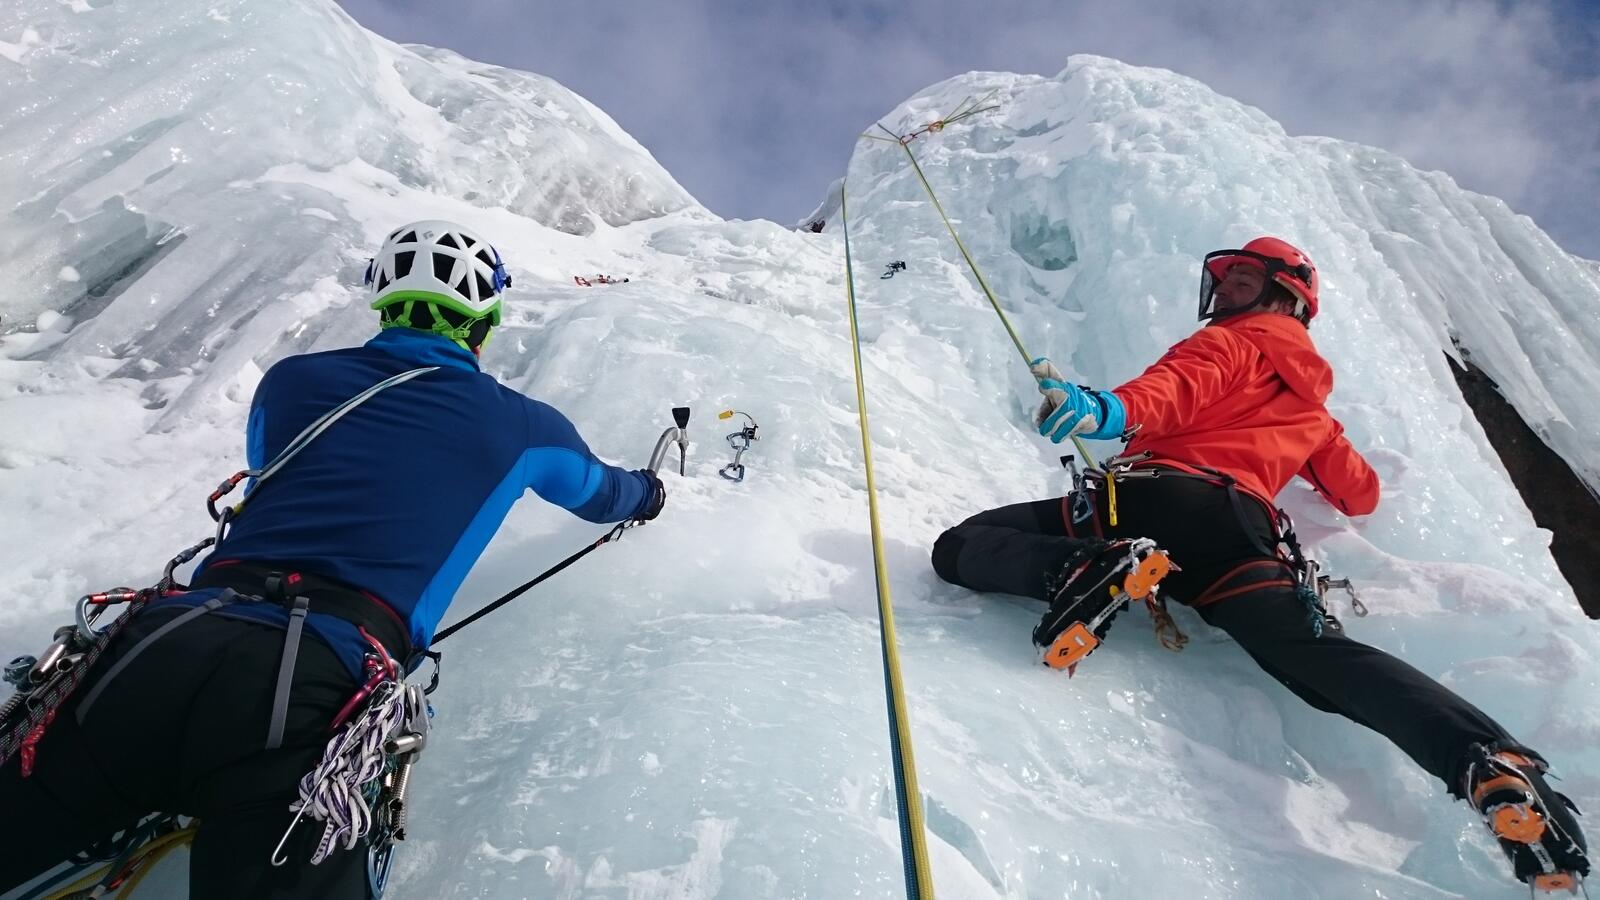 Free photo Mountain climbers climb an icy mountain